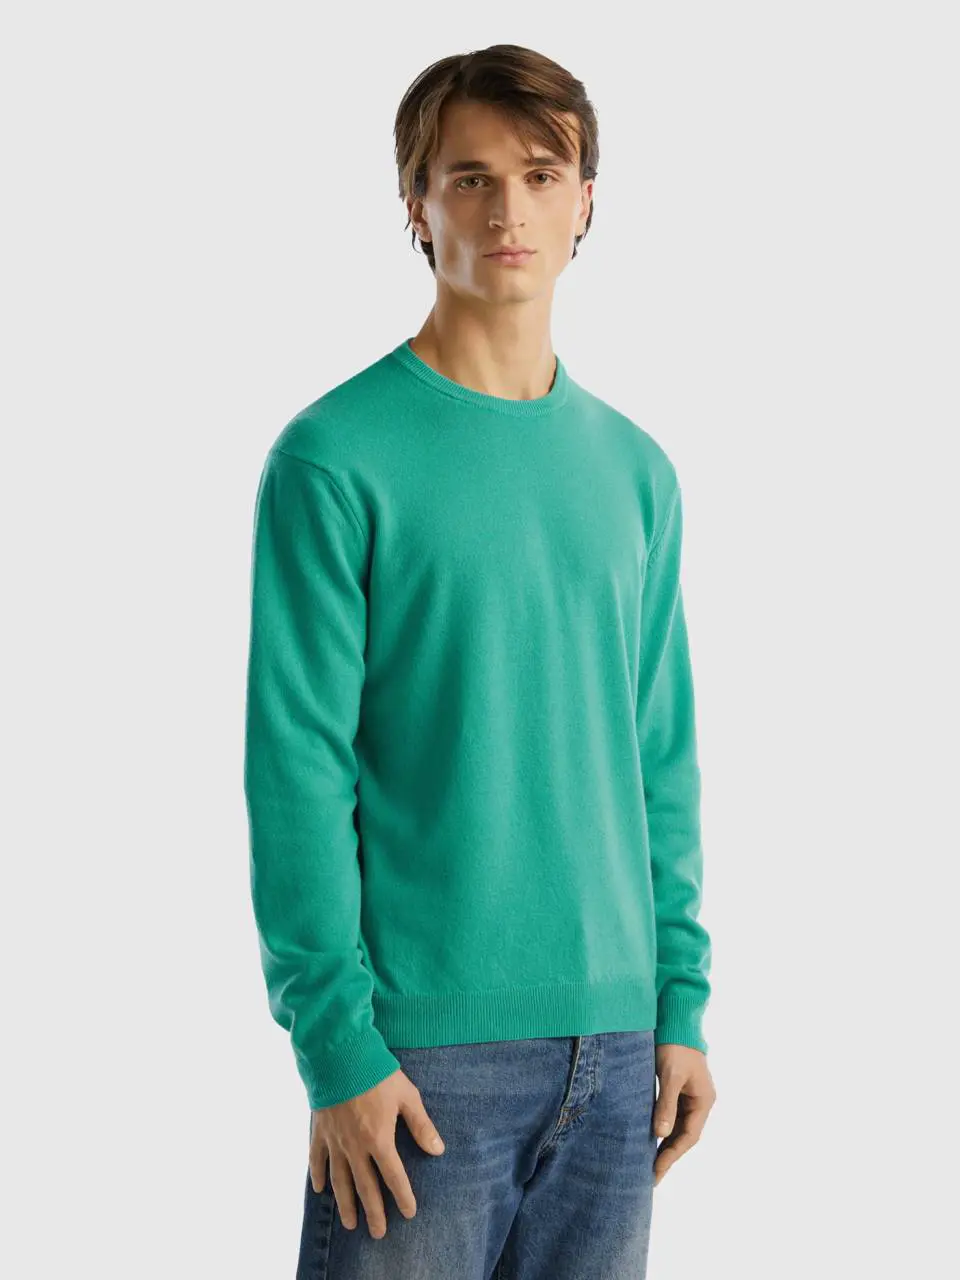 Benetton light green crew neck sweater in pure merino wool. 1